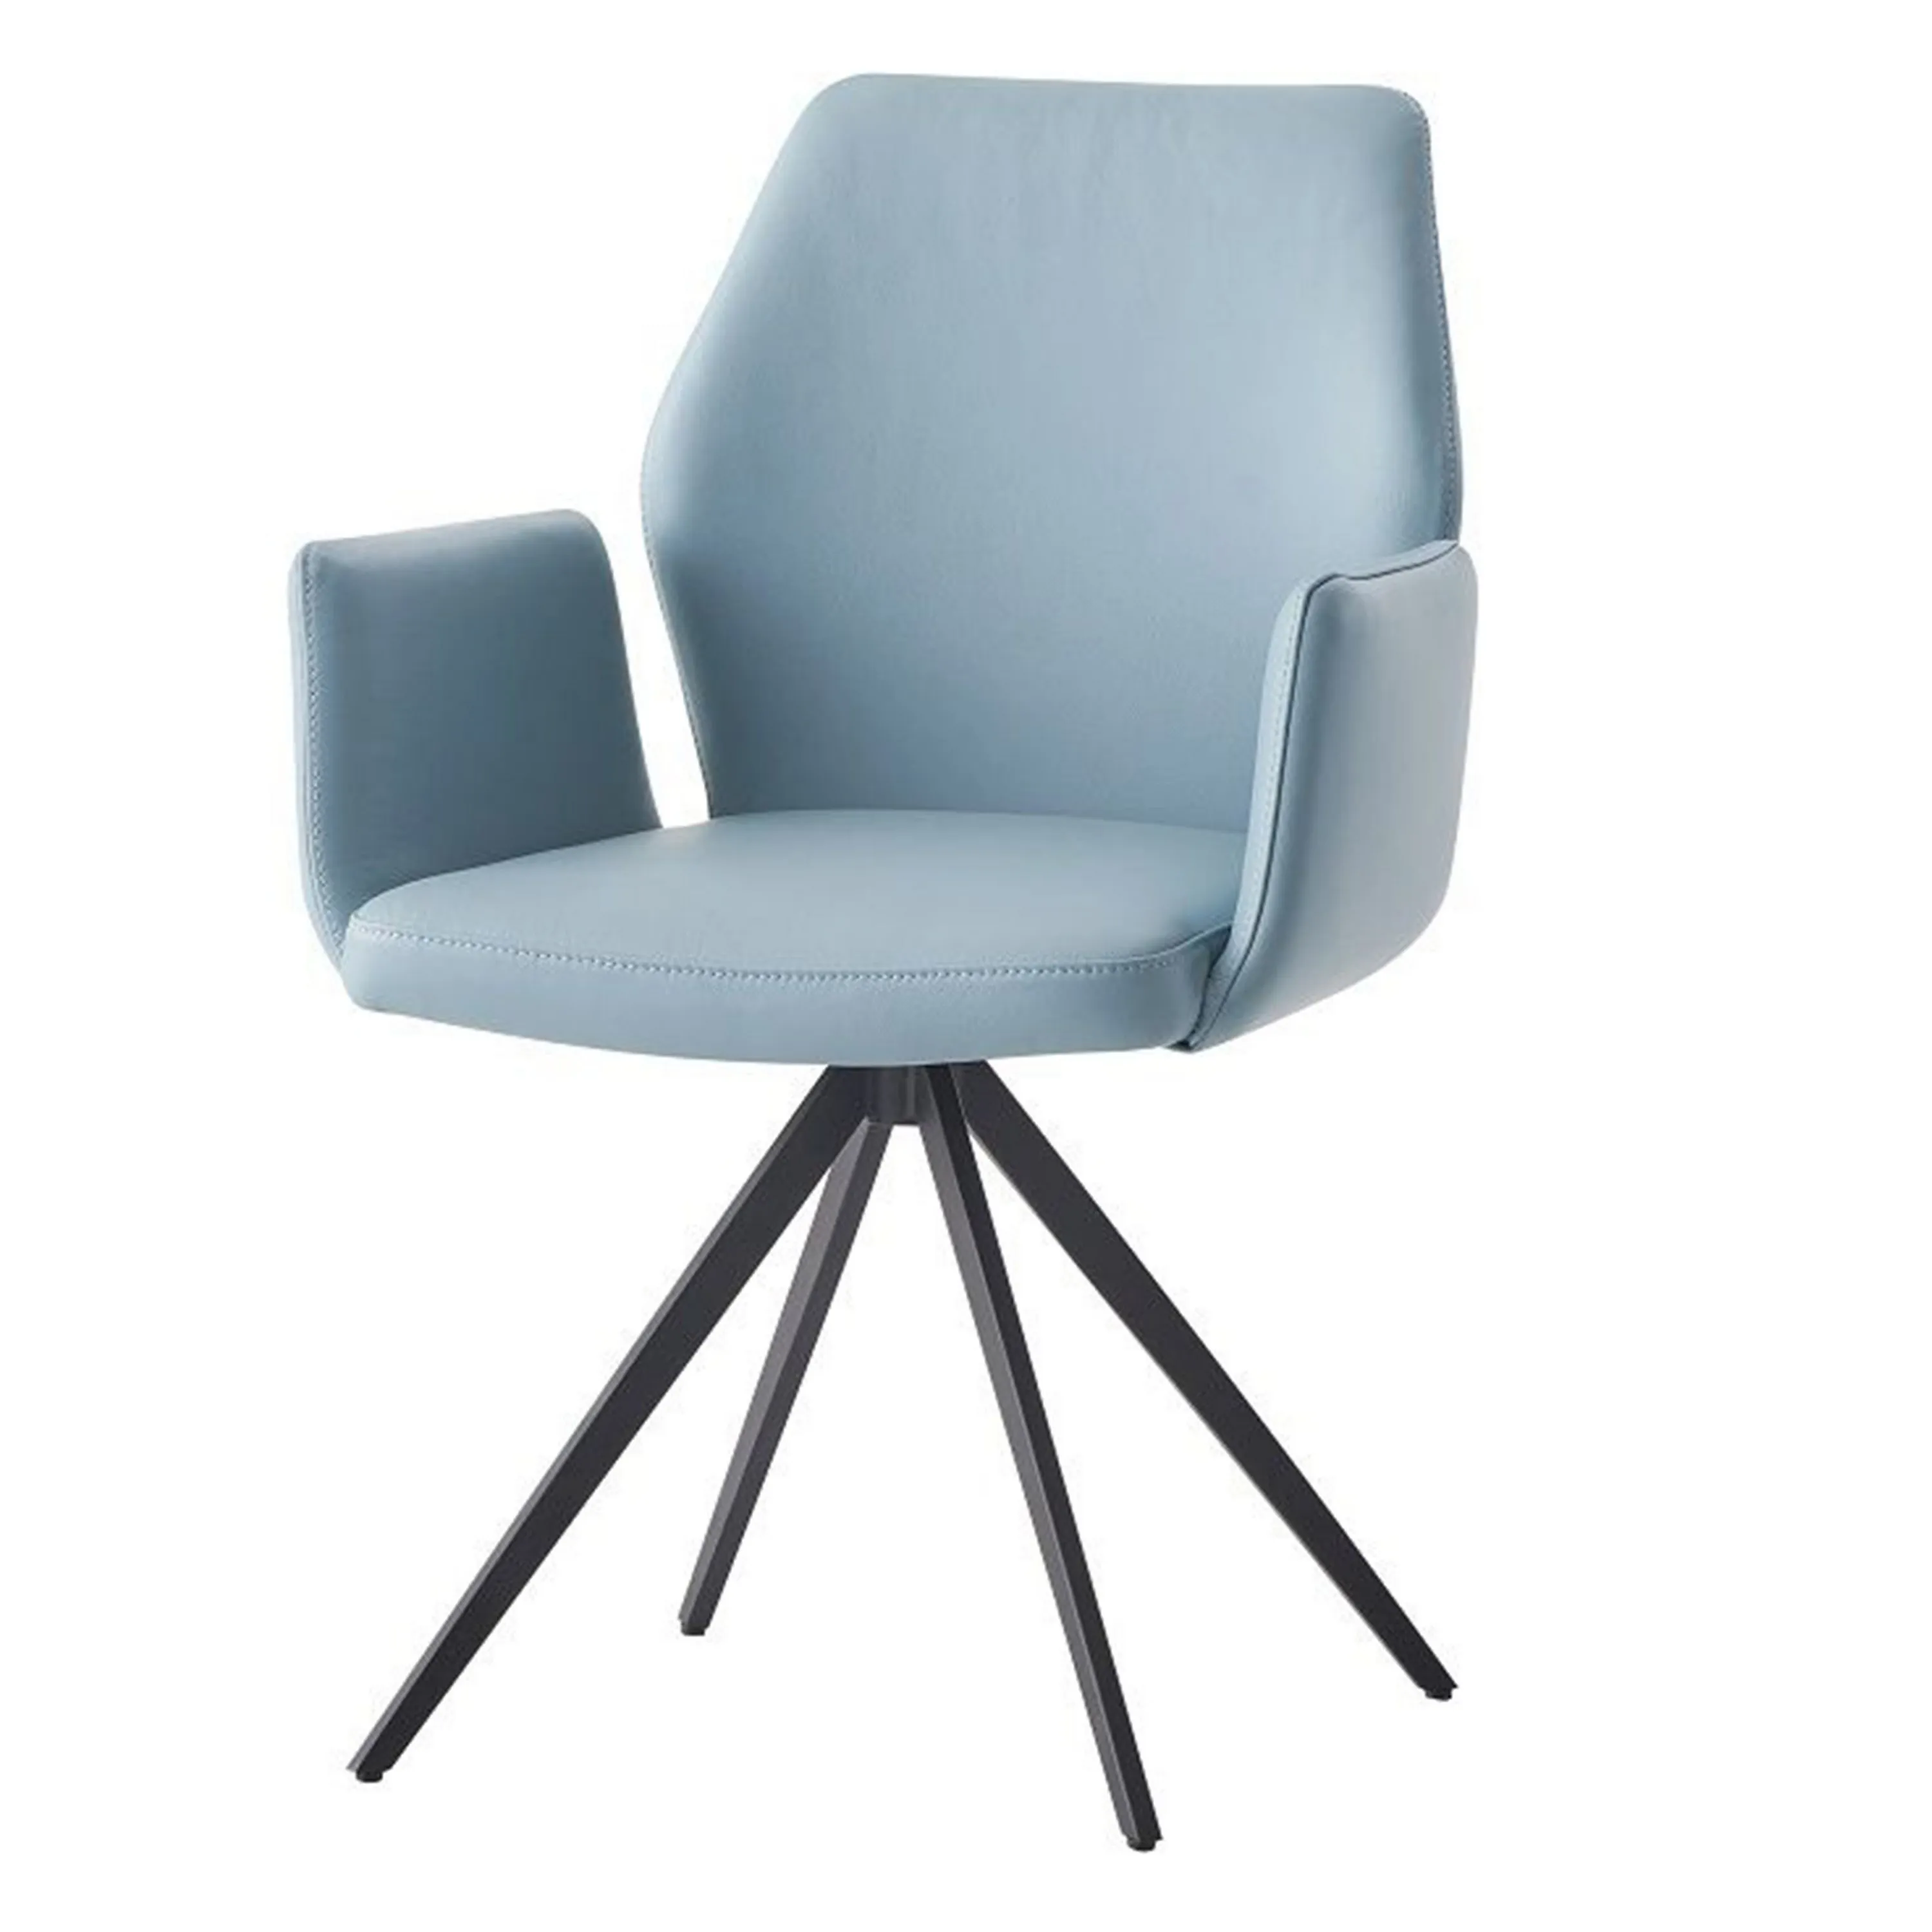 24 Inch Swivel Side Chair, Light Blue Leather Upholstery, Black Legs - Benzara